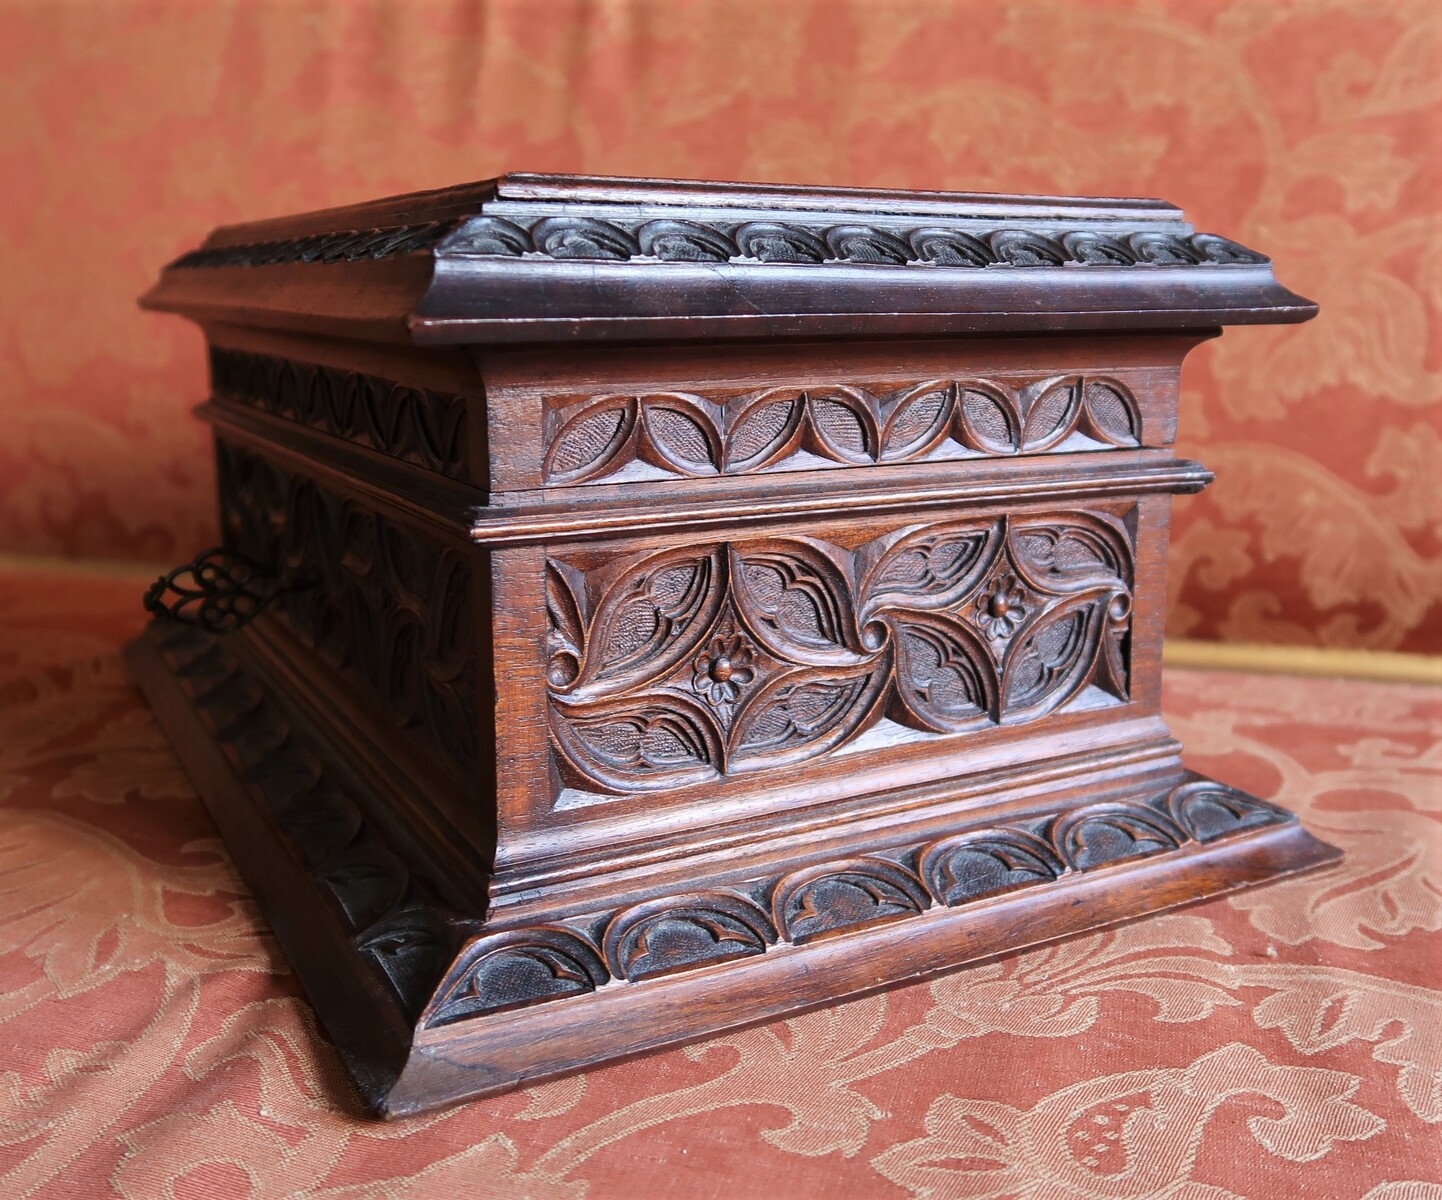 Gothic Revival box